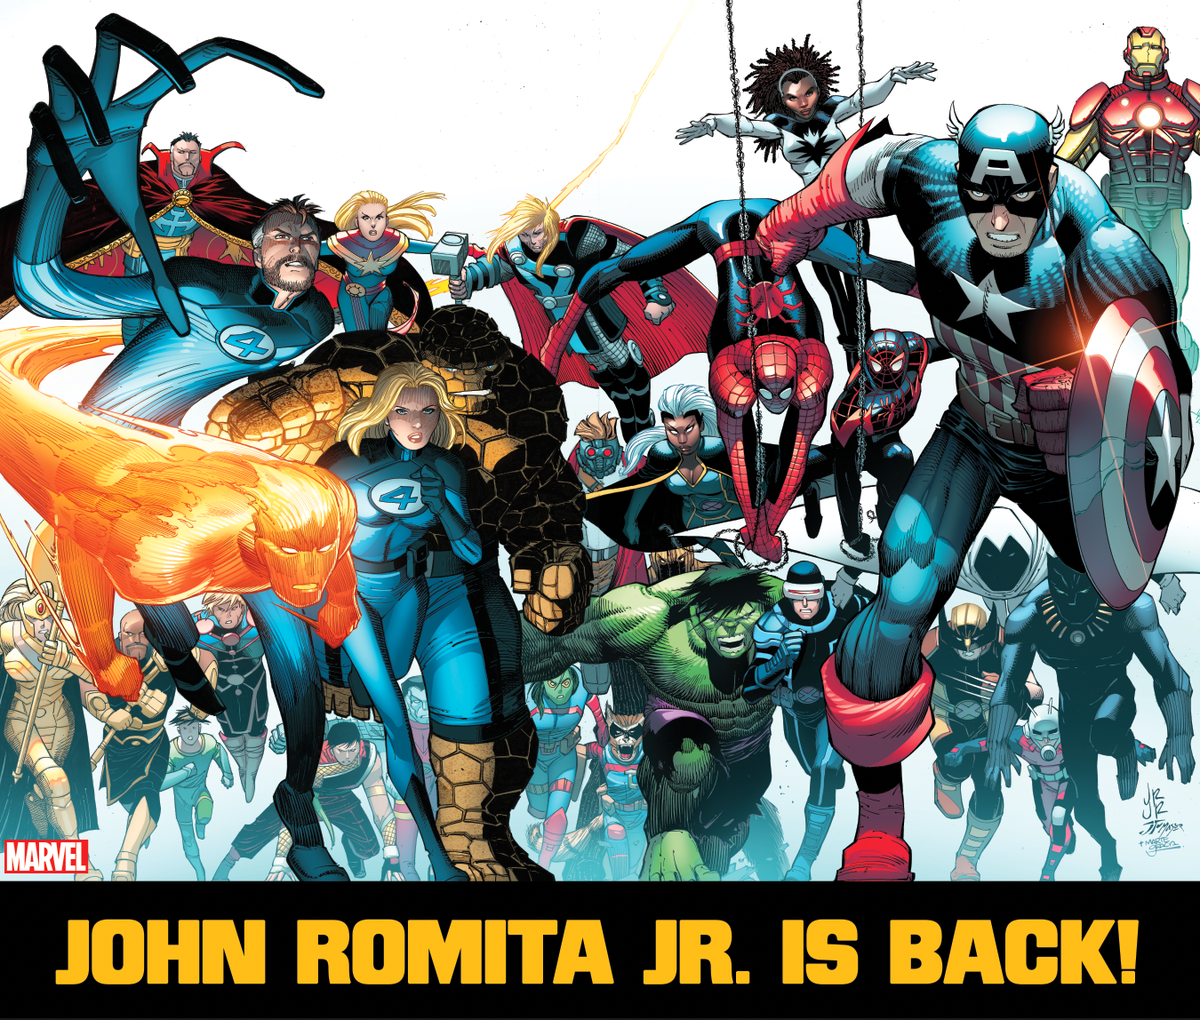 La leggenda dei fumetti John Romita Jr. torna alla Marvel quest'estate